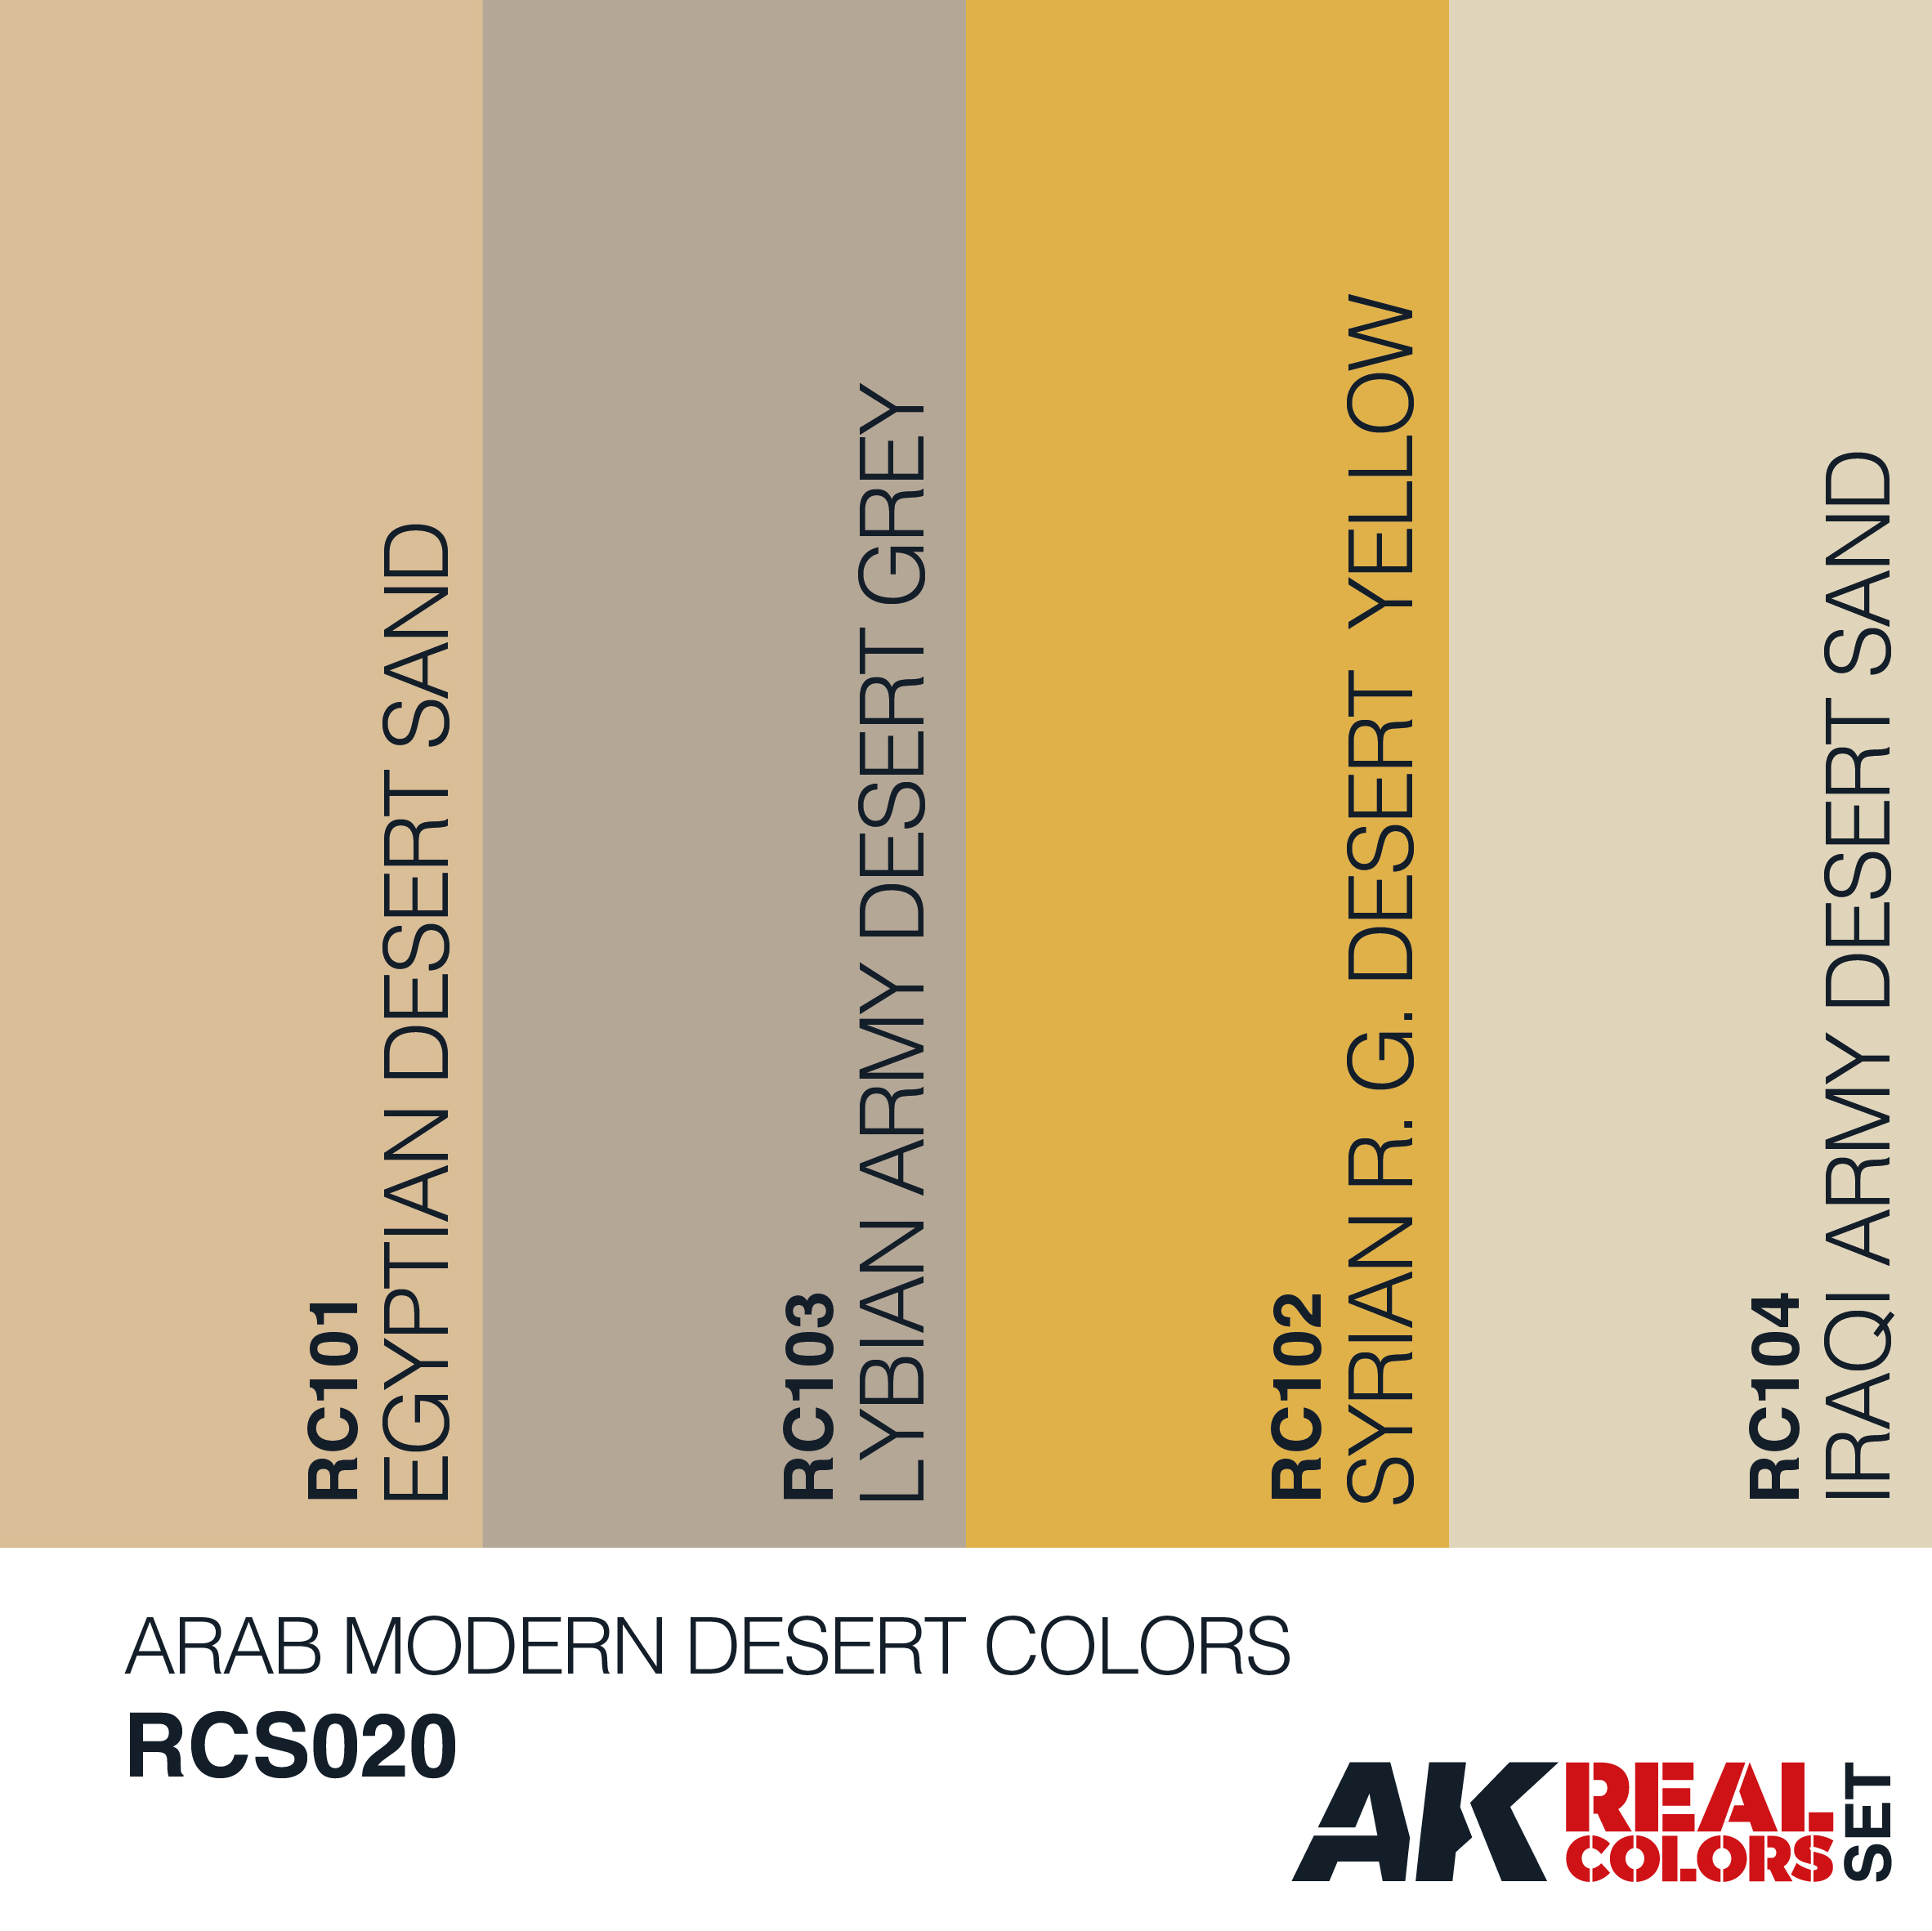 Arab Armor Desert Colors